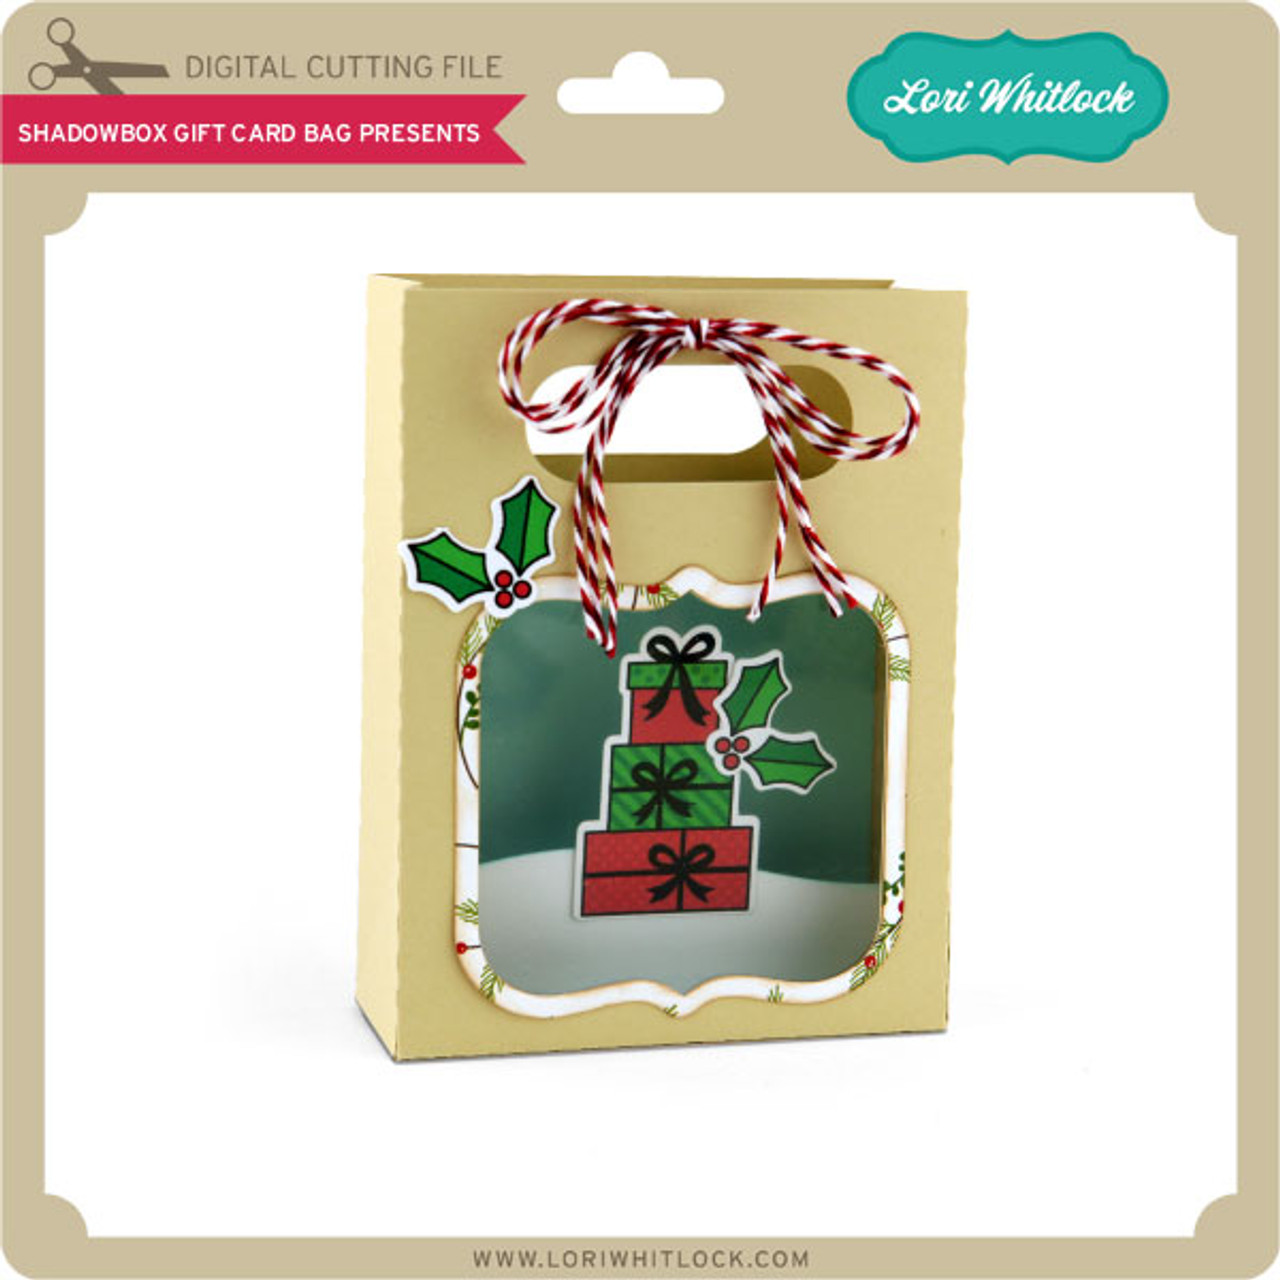 Christmas Present Gift Card Holder SVG File for Cricut